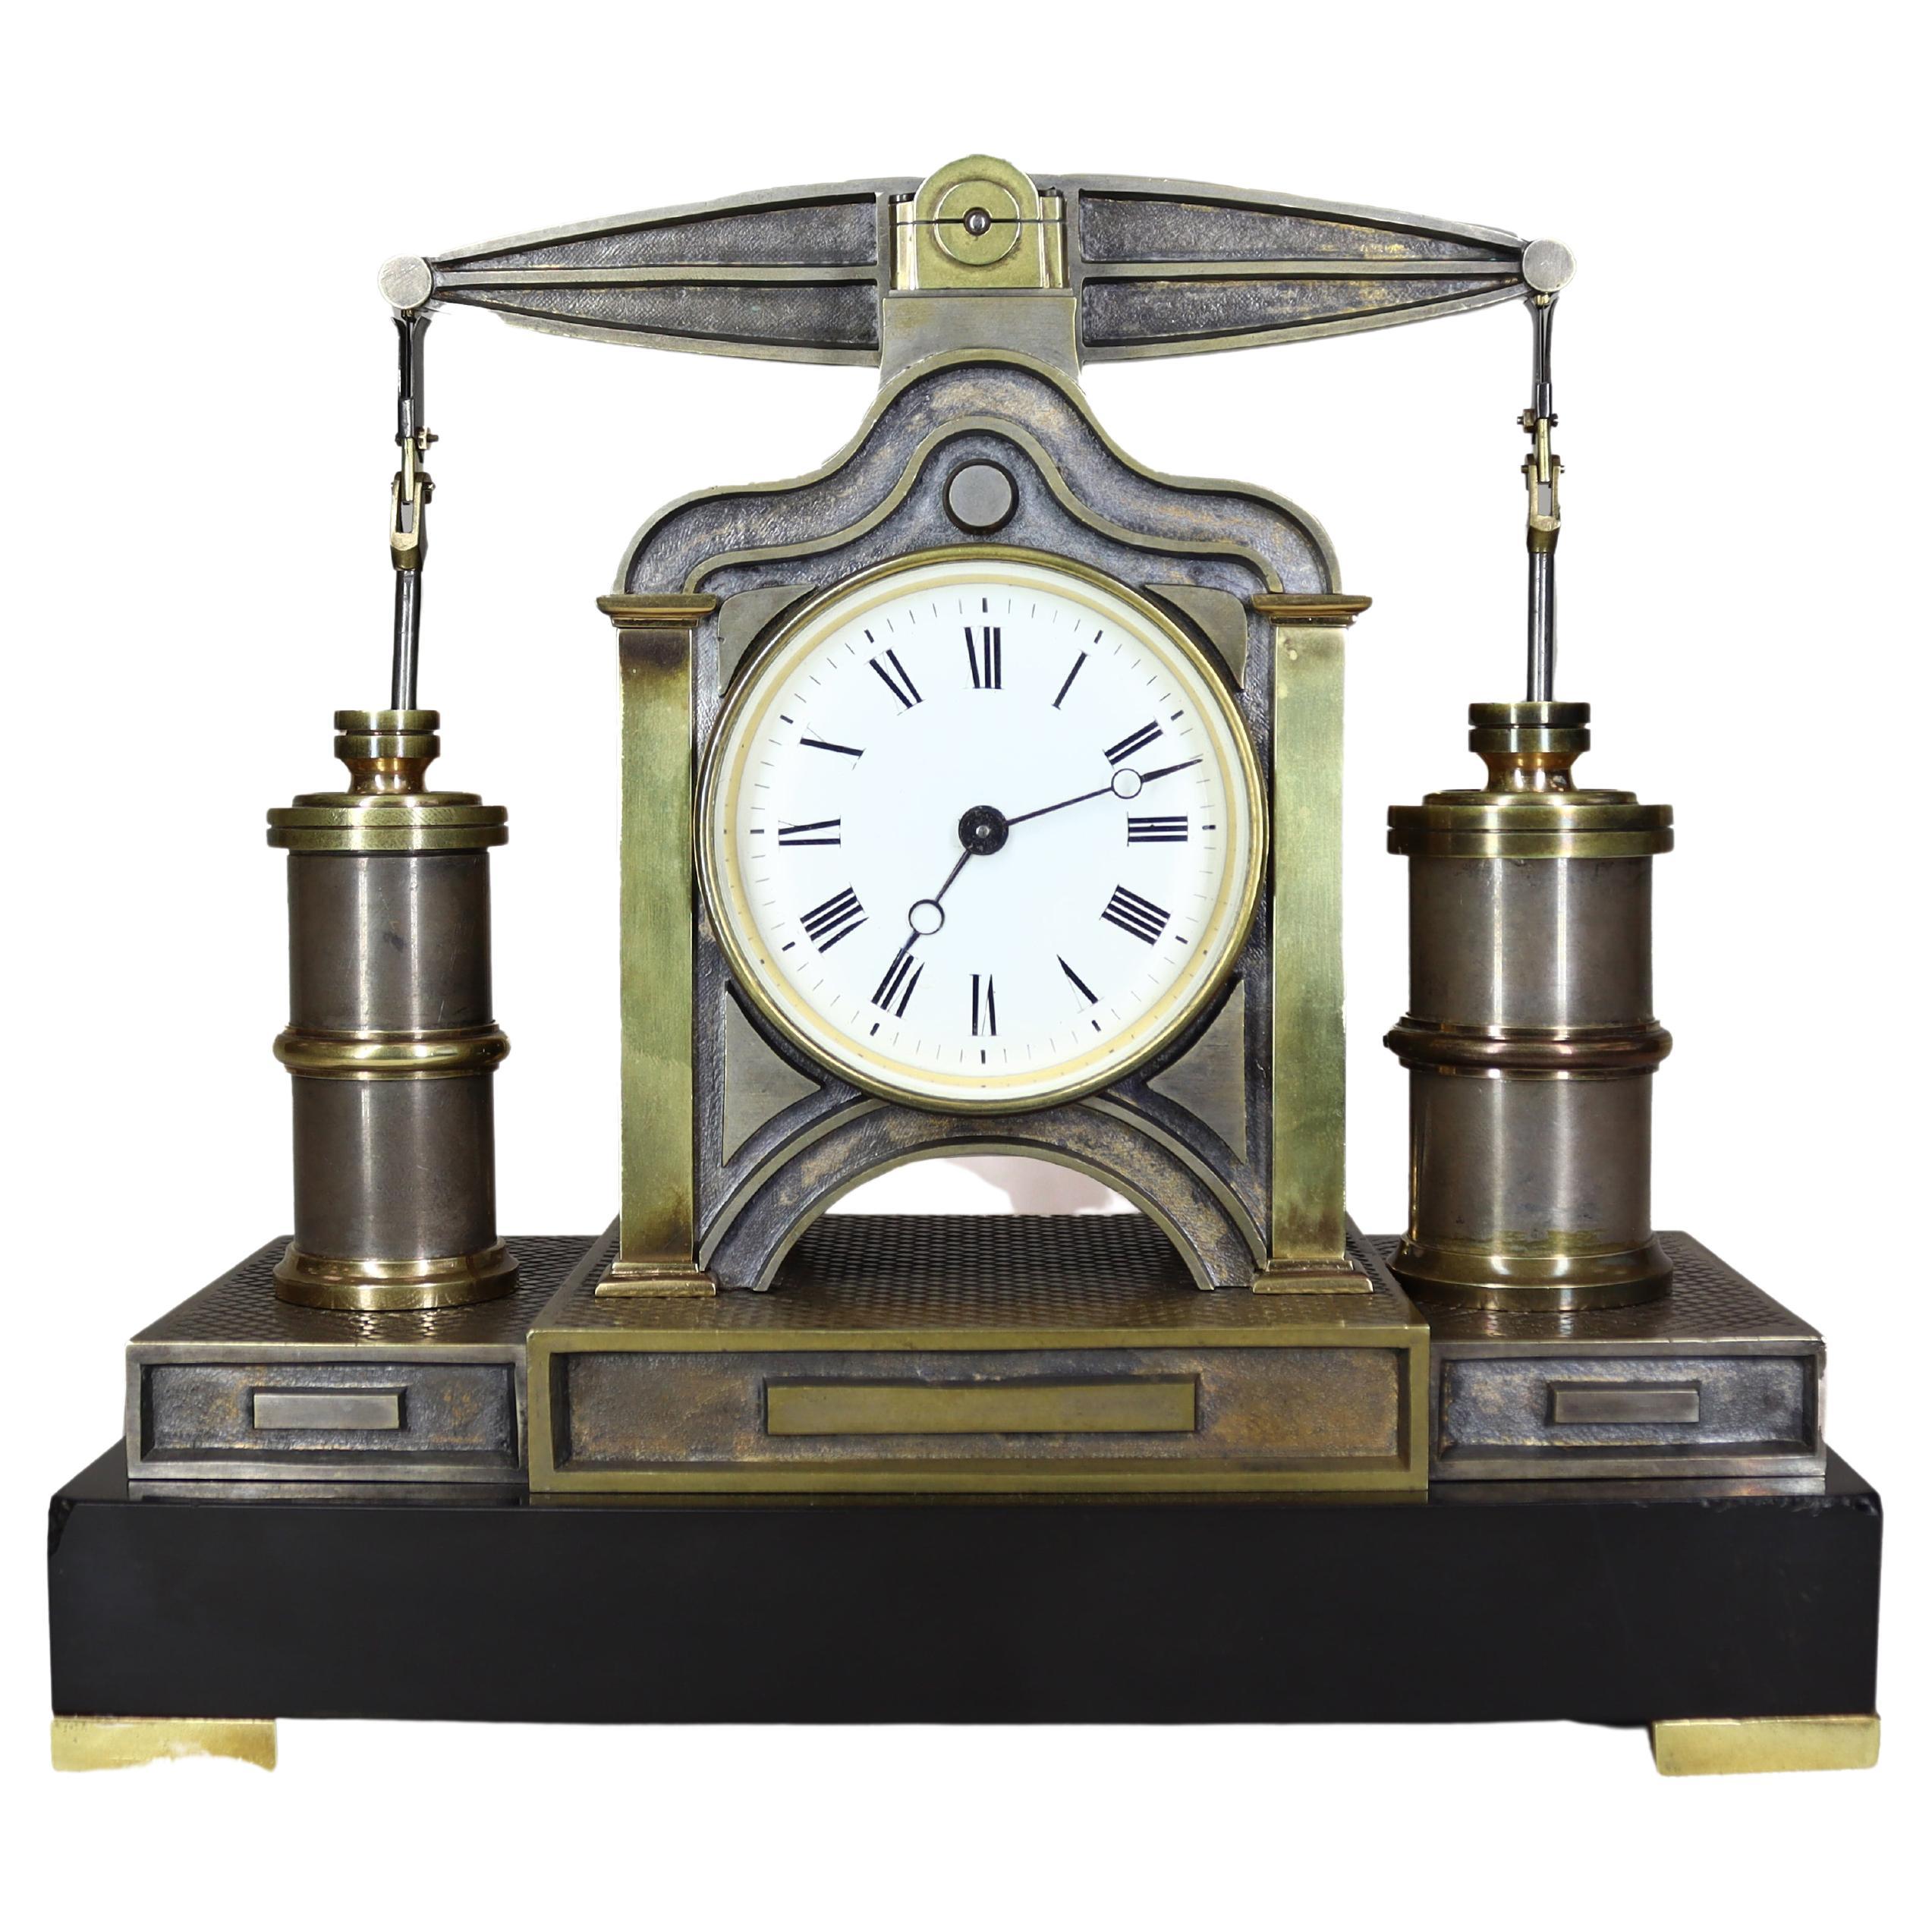 Horloge Automaton Beam Engine par Andre Guilmet